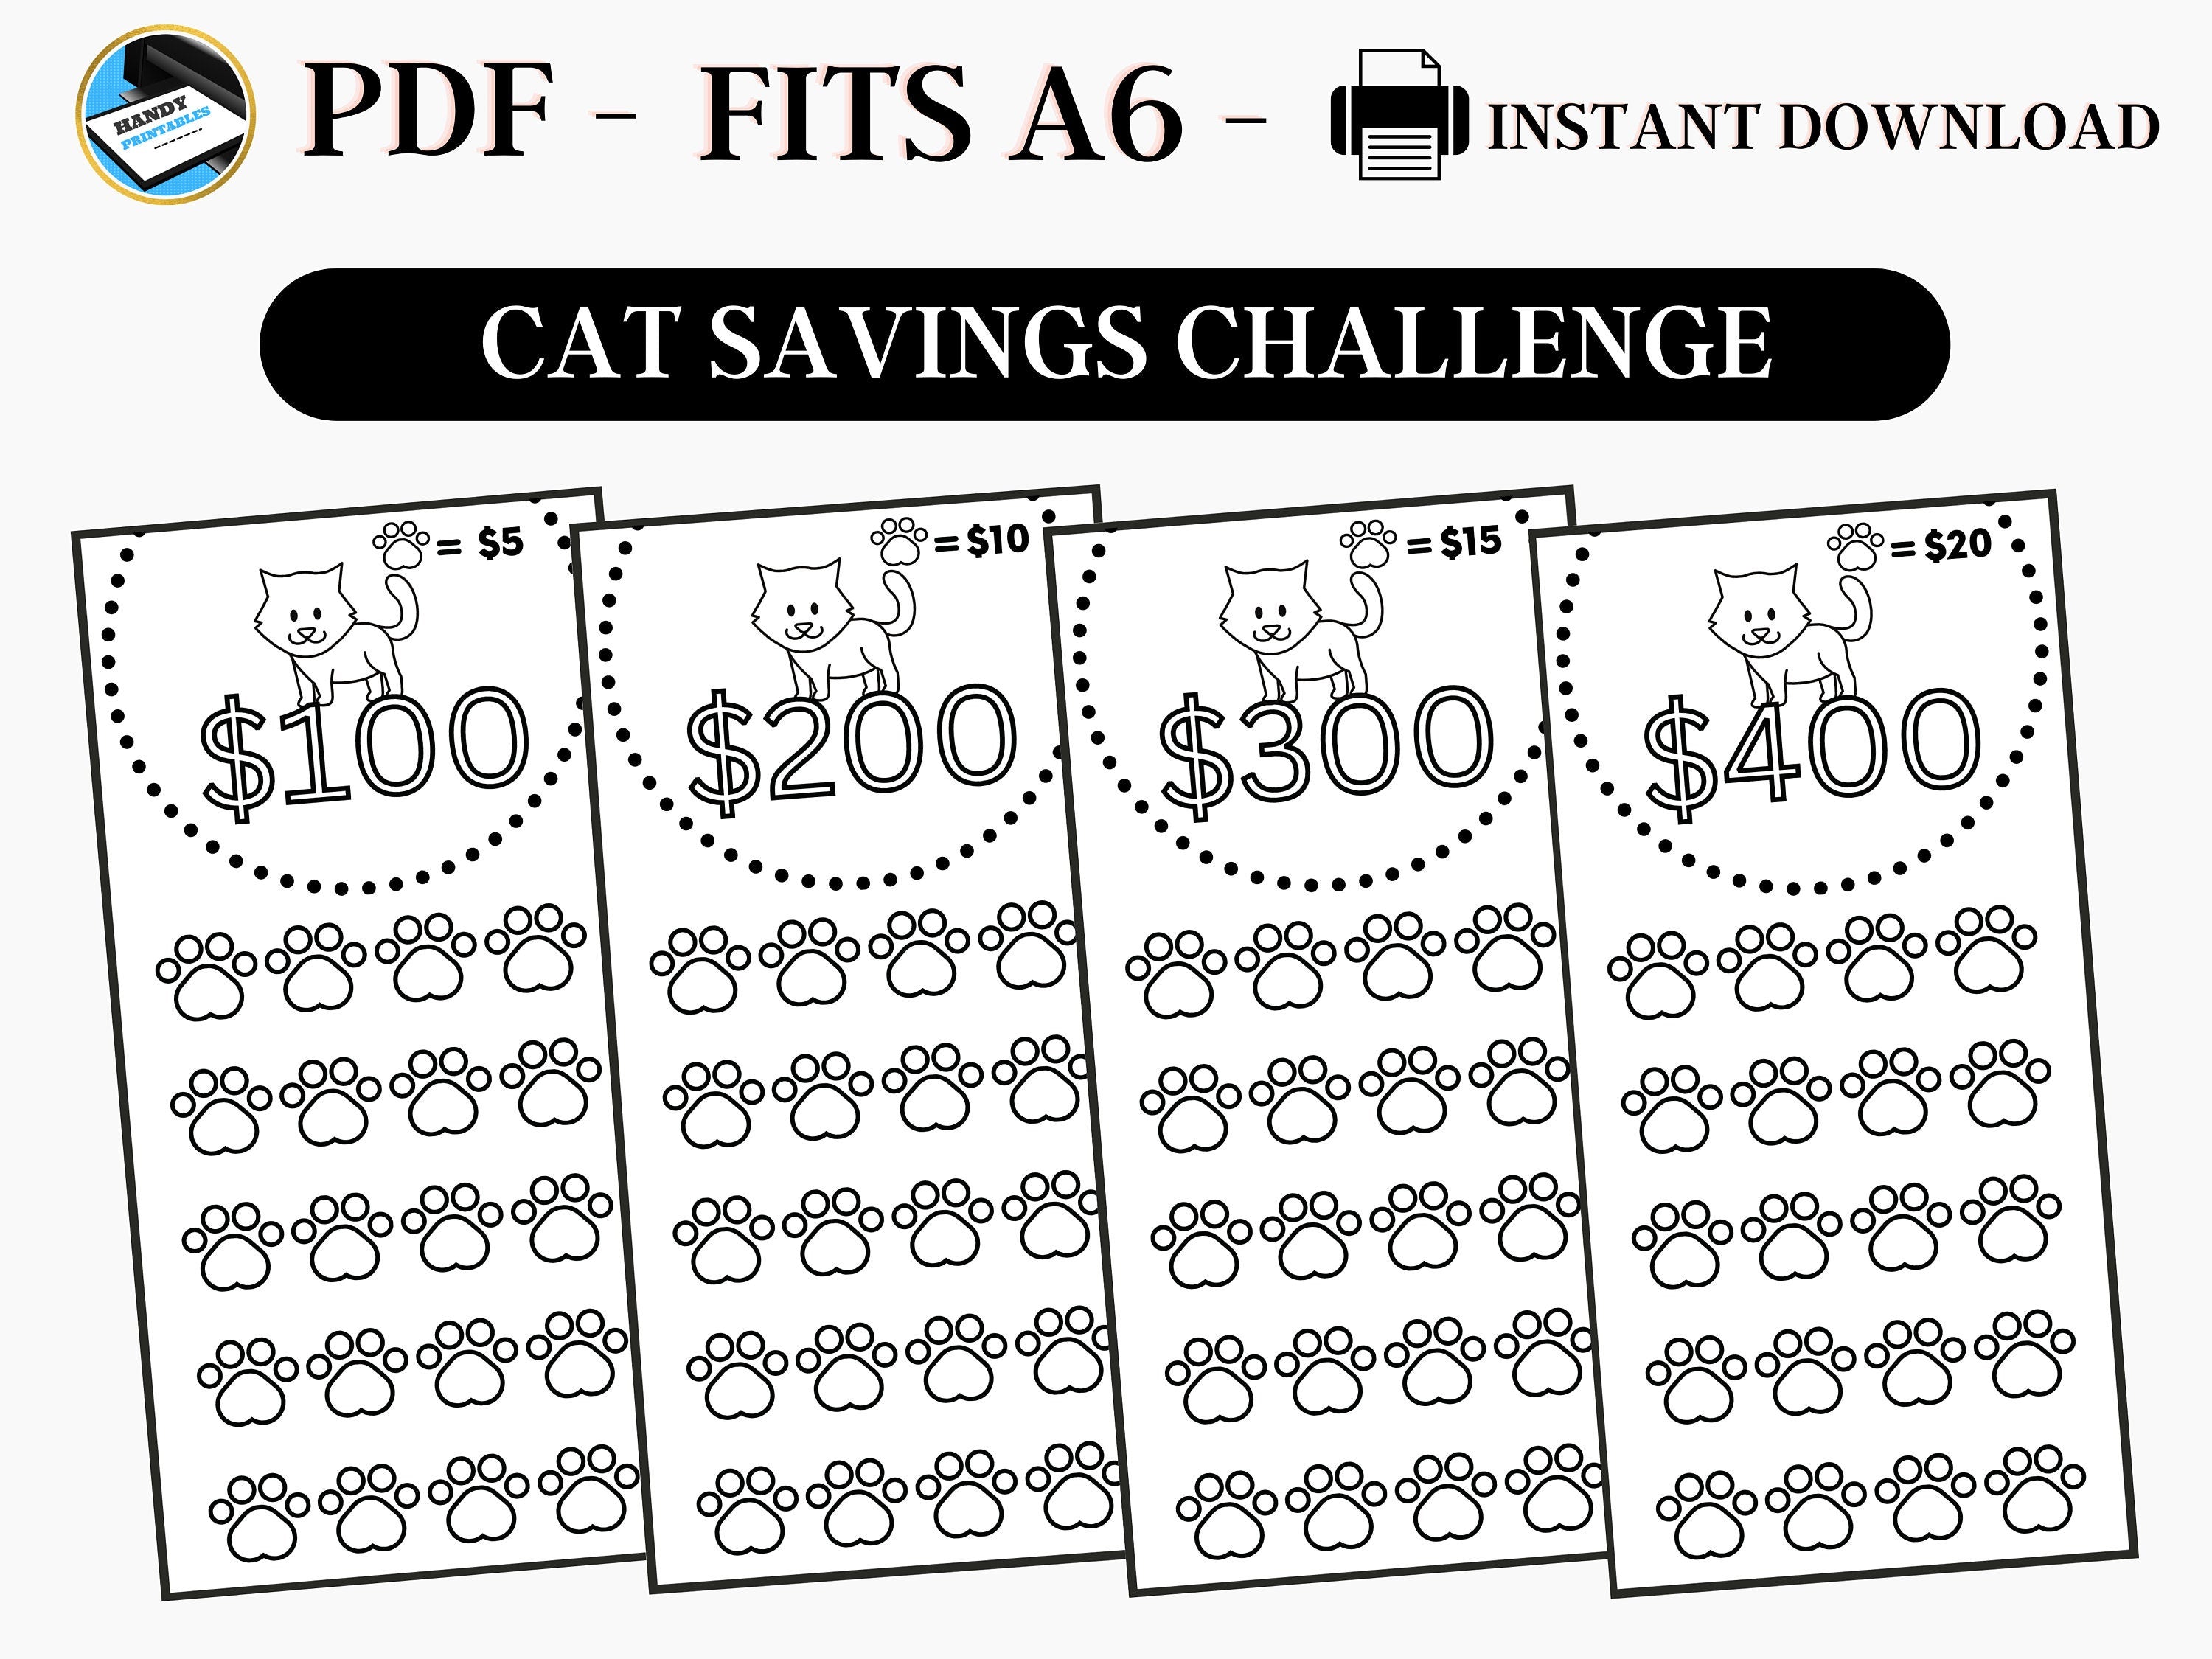 Cat Savings Challenge